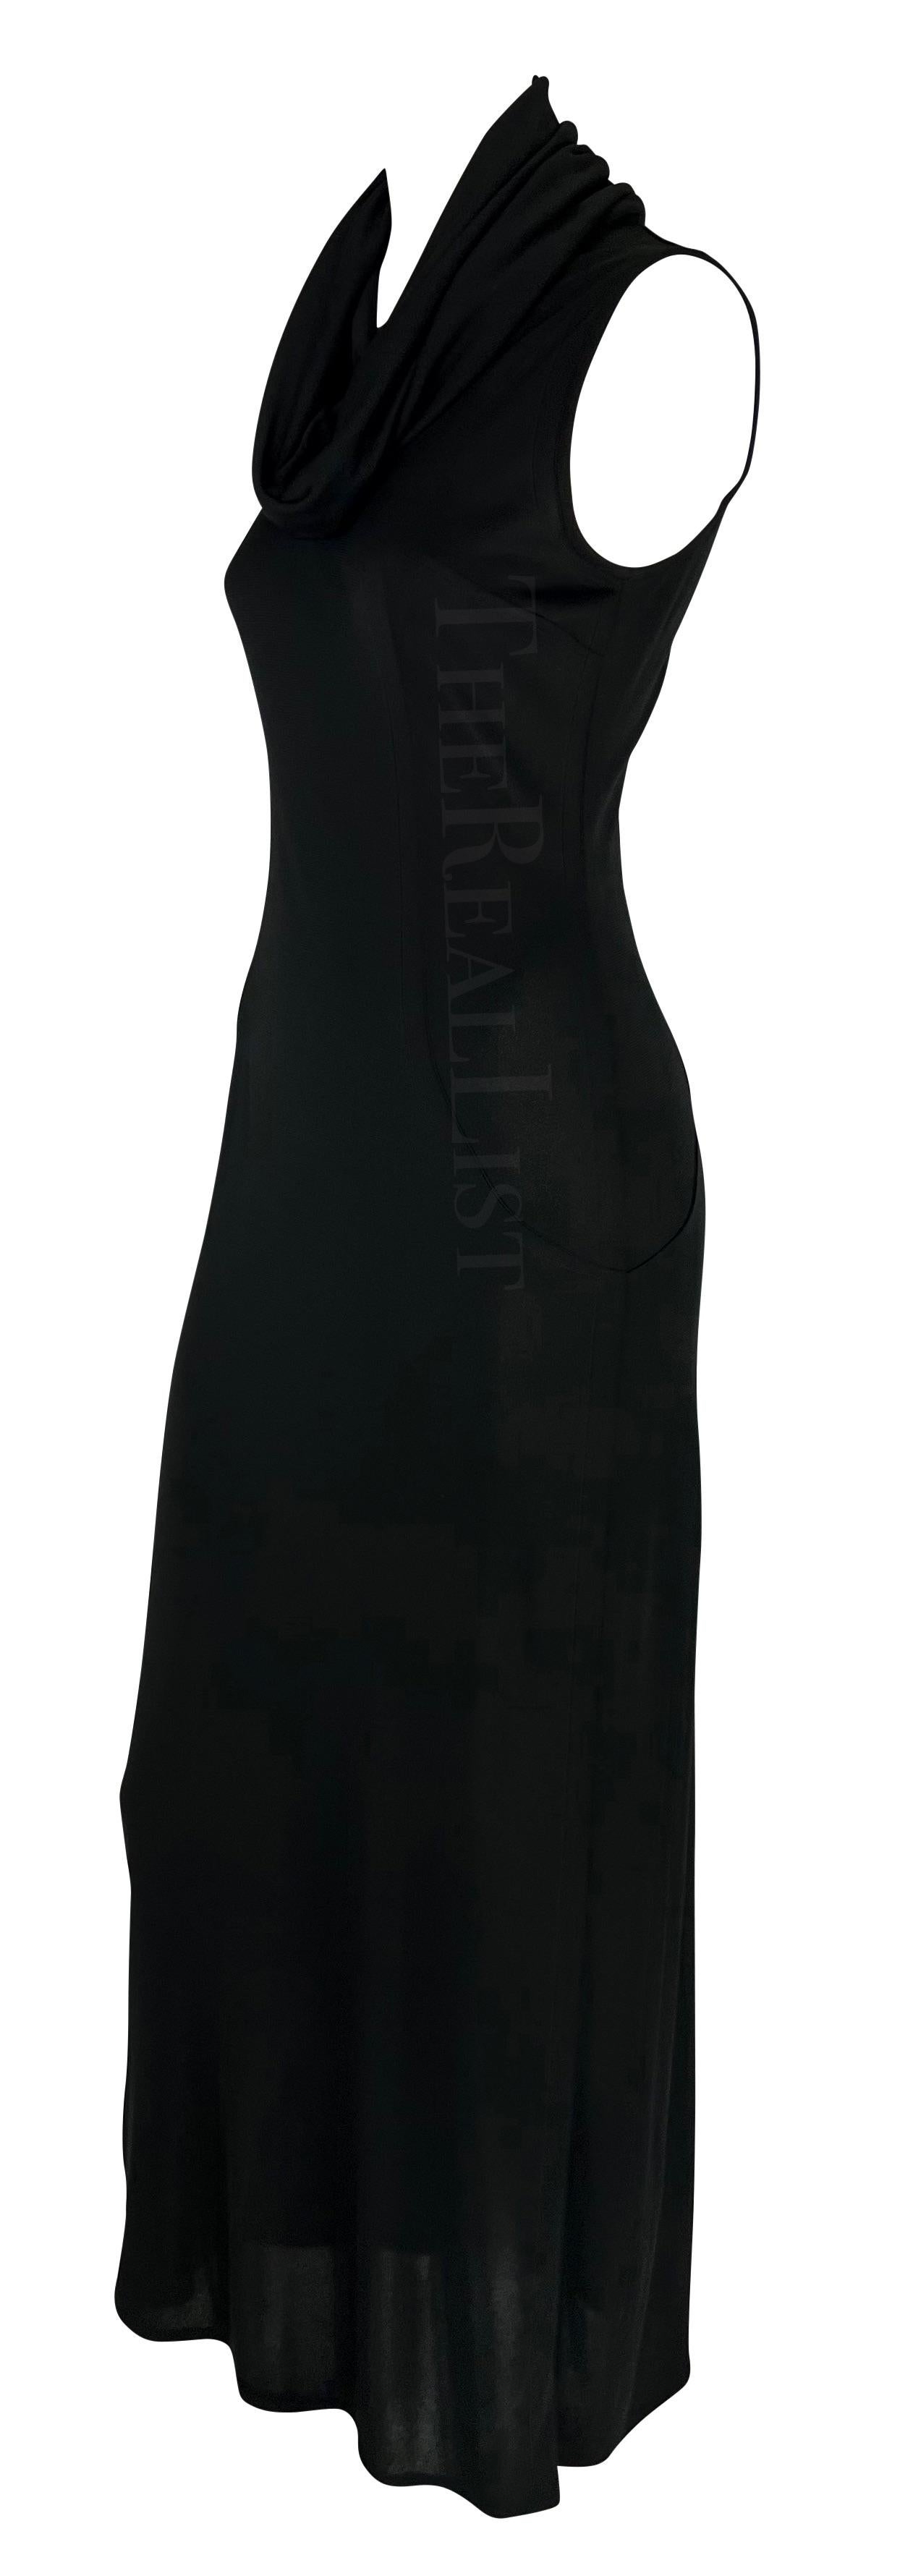 S/S 1996 Dolce & Gabbana Runway Hooded Stretch Black High Slit Dress For Sale 6